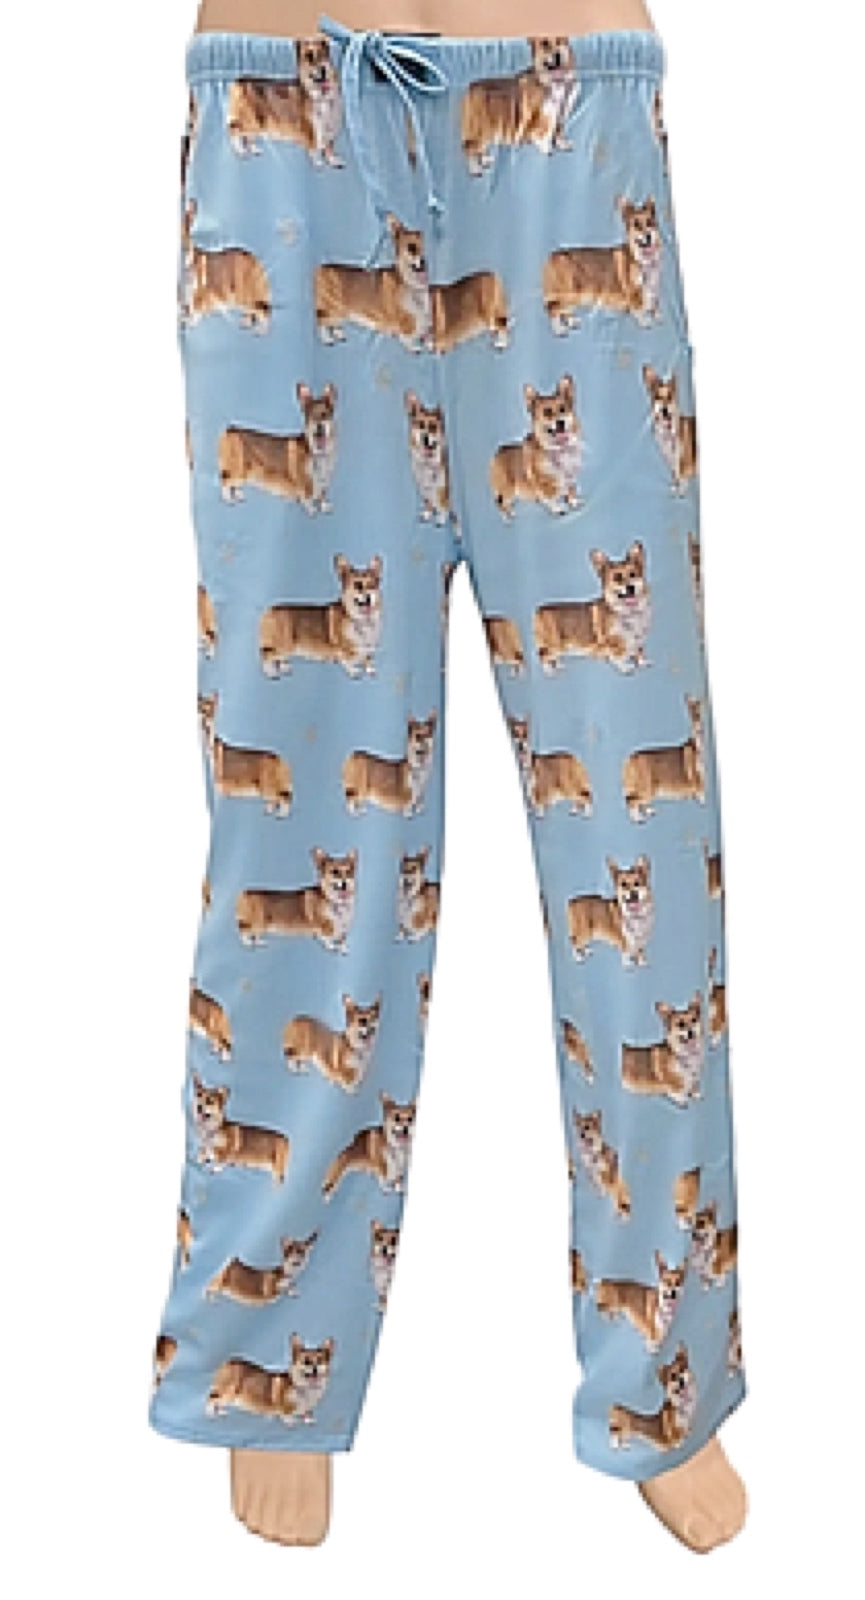 Corgi Pajama Pants